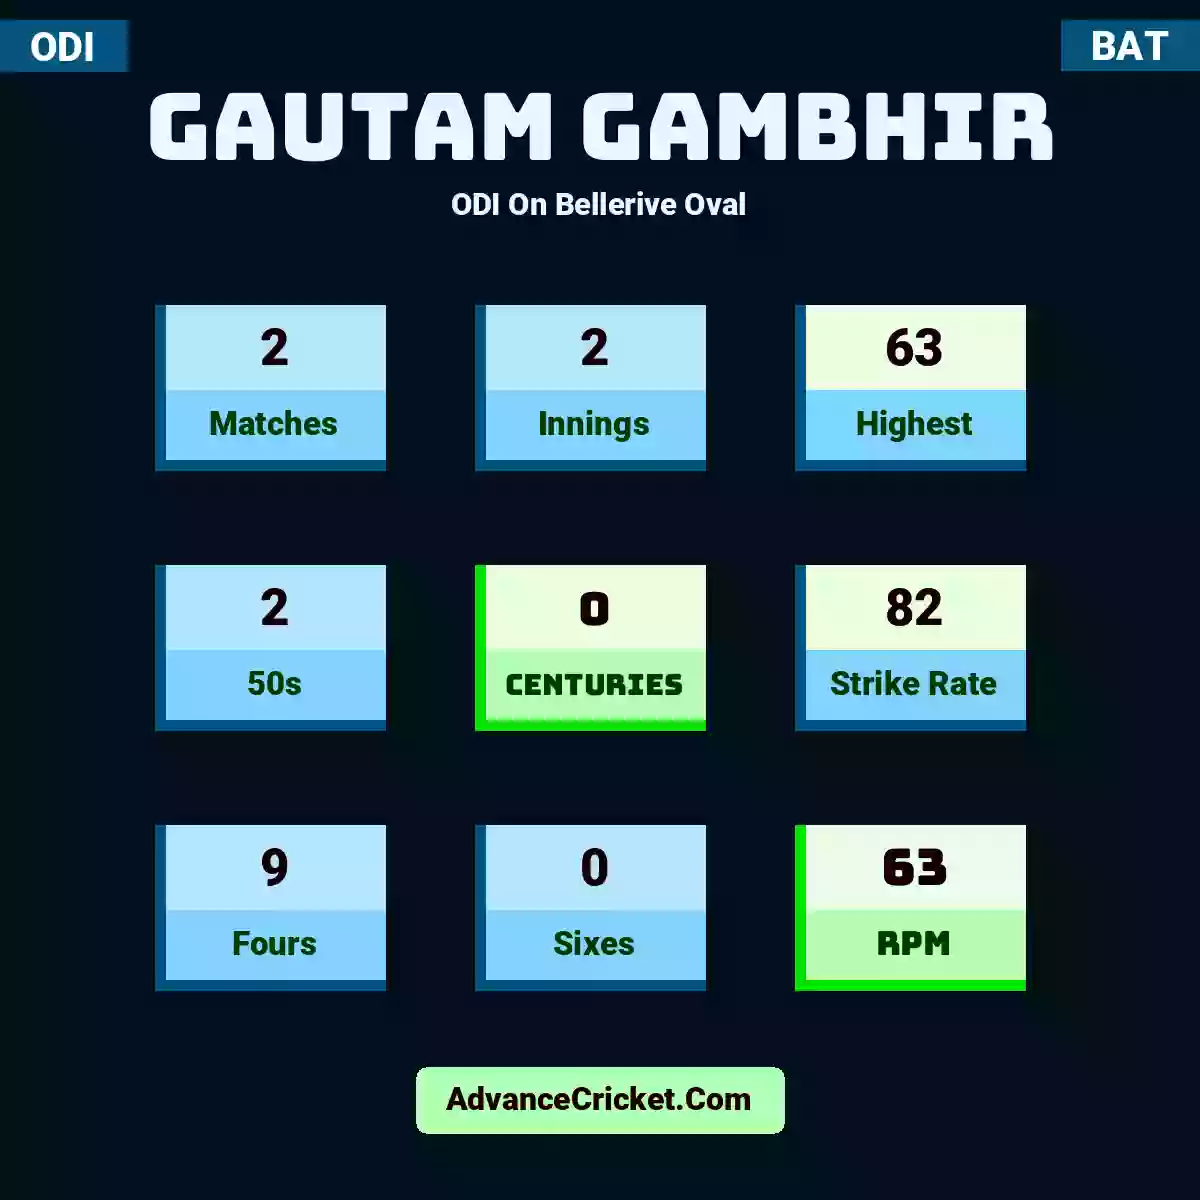 Gautam Gambhir ODI  On Bellerive Oval, Gautam Gambhir played 2 matches, scored 63 runs as highest, 2 half-centuries, and 0 centuries, with a strike rate of 82. G.Gambhir hit 9 fours and 0 sixes, with an RPM of 63.